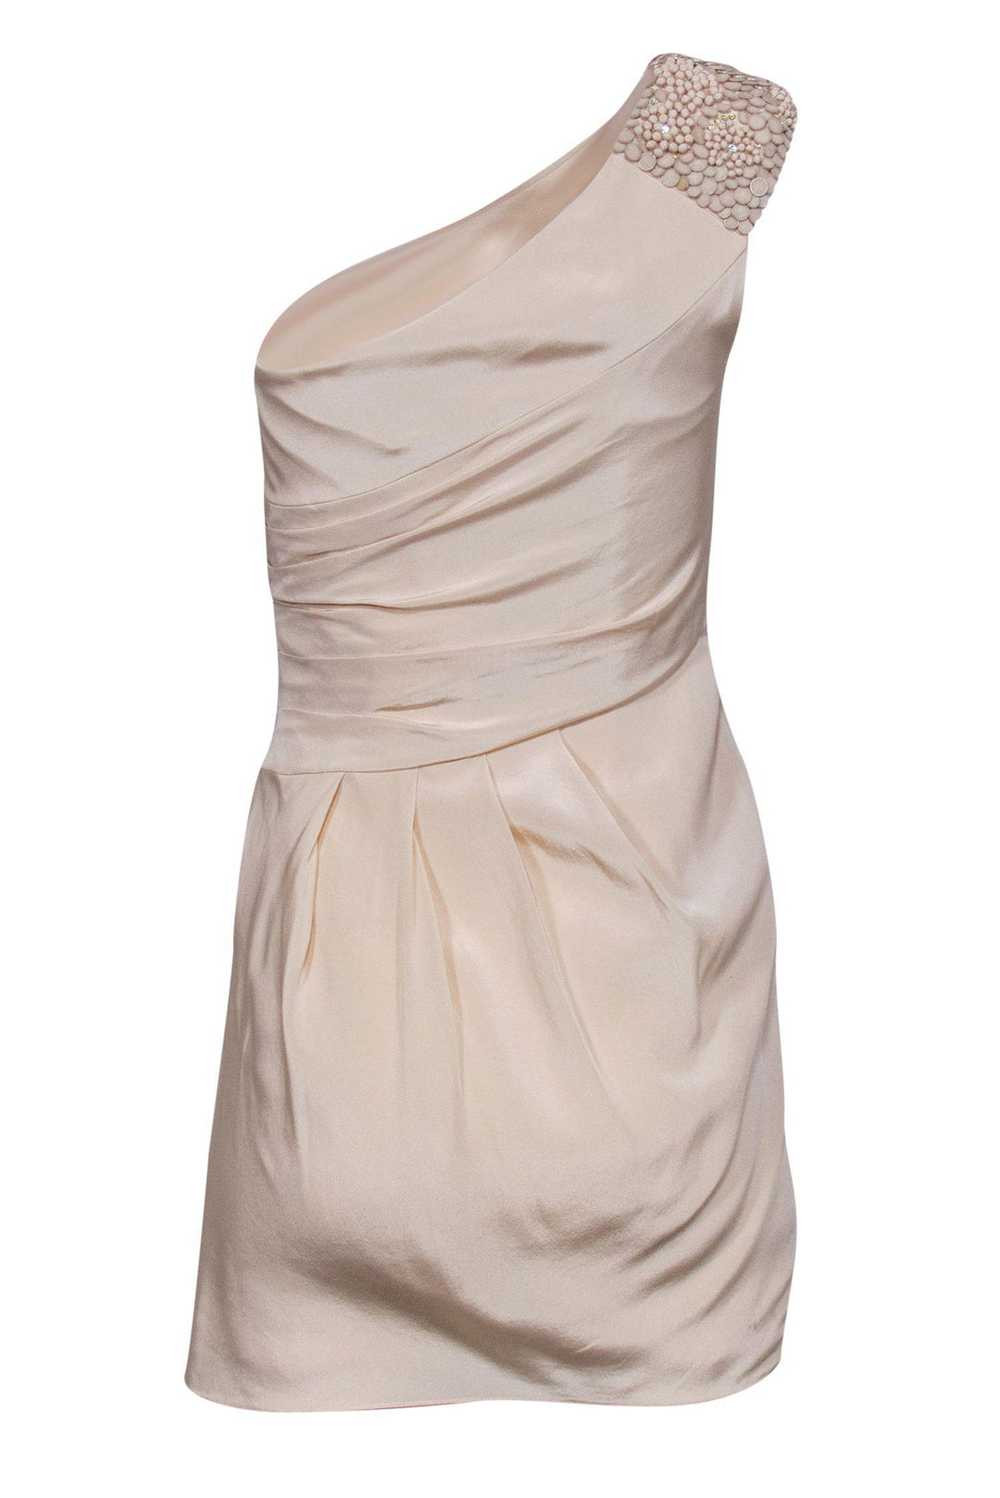 Tibi - Cream Satin One-Shoulder Beaded Dress Sz 4 - image 4